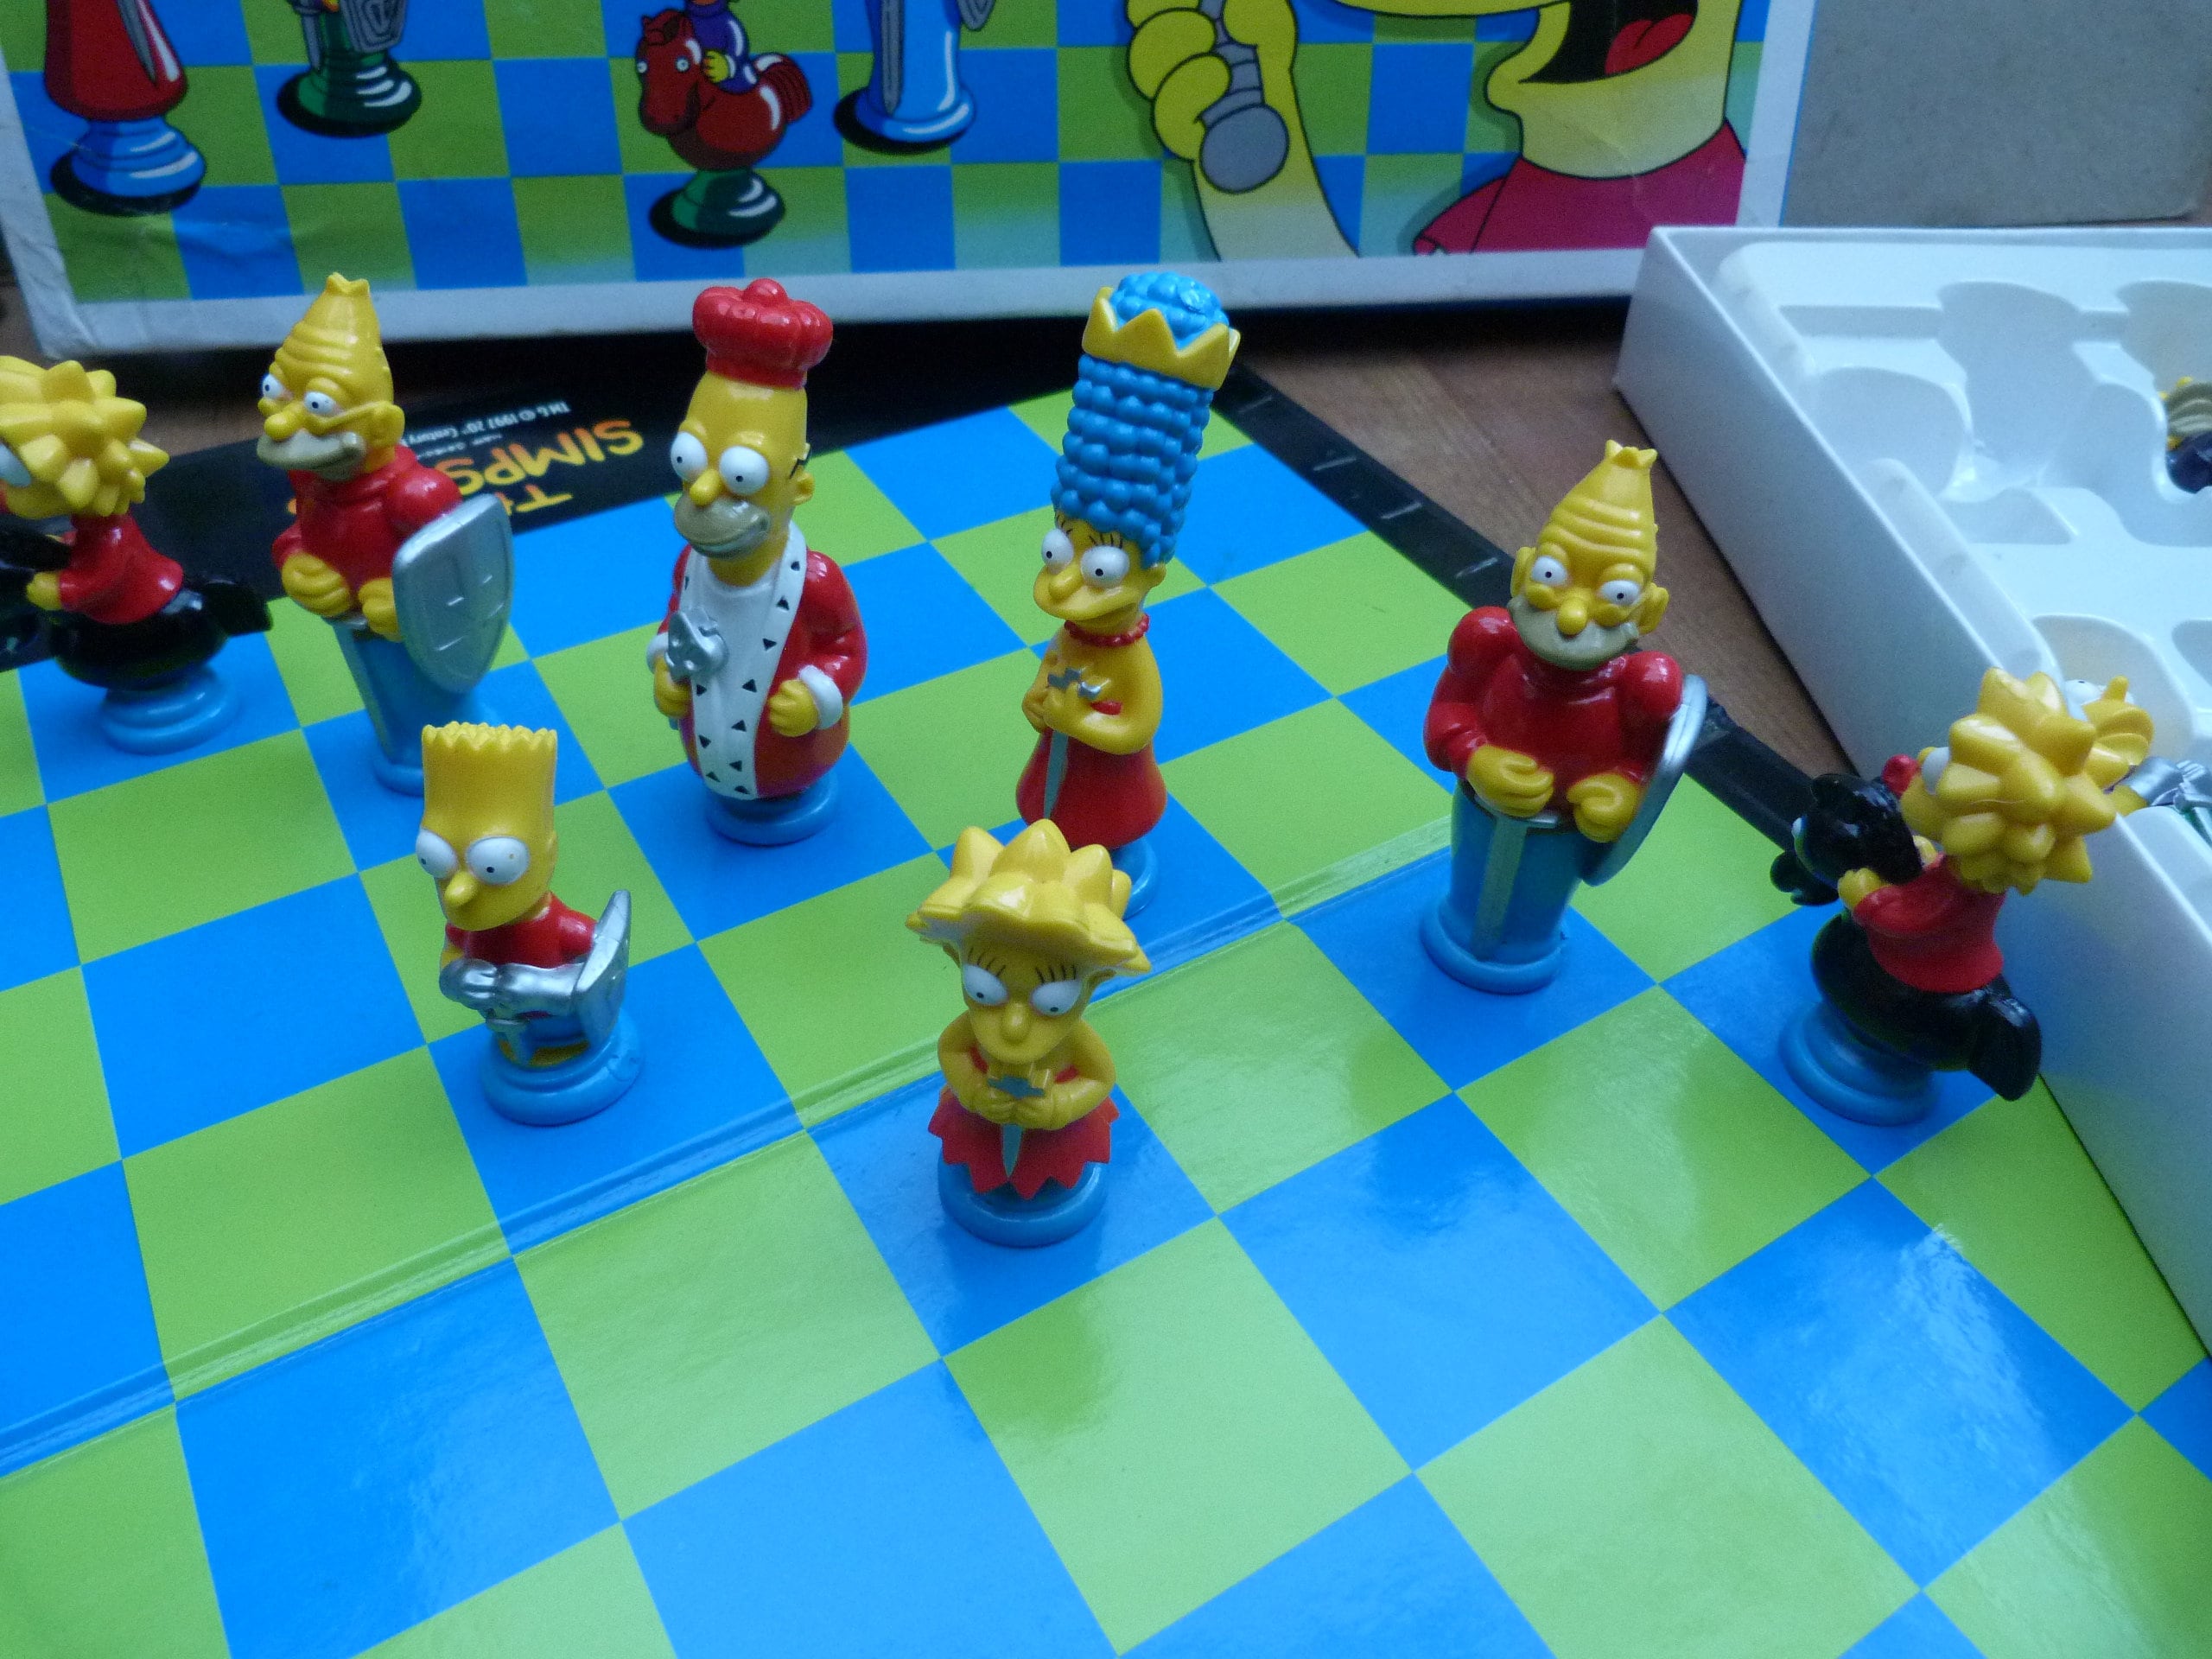 Chess Game Pieces - Full Pack - Jogo de Xadrez 3D Model Collection